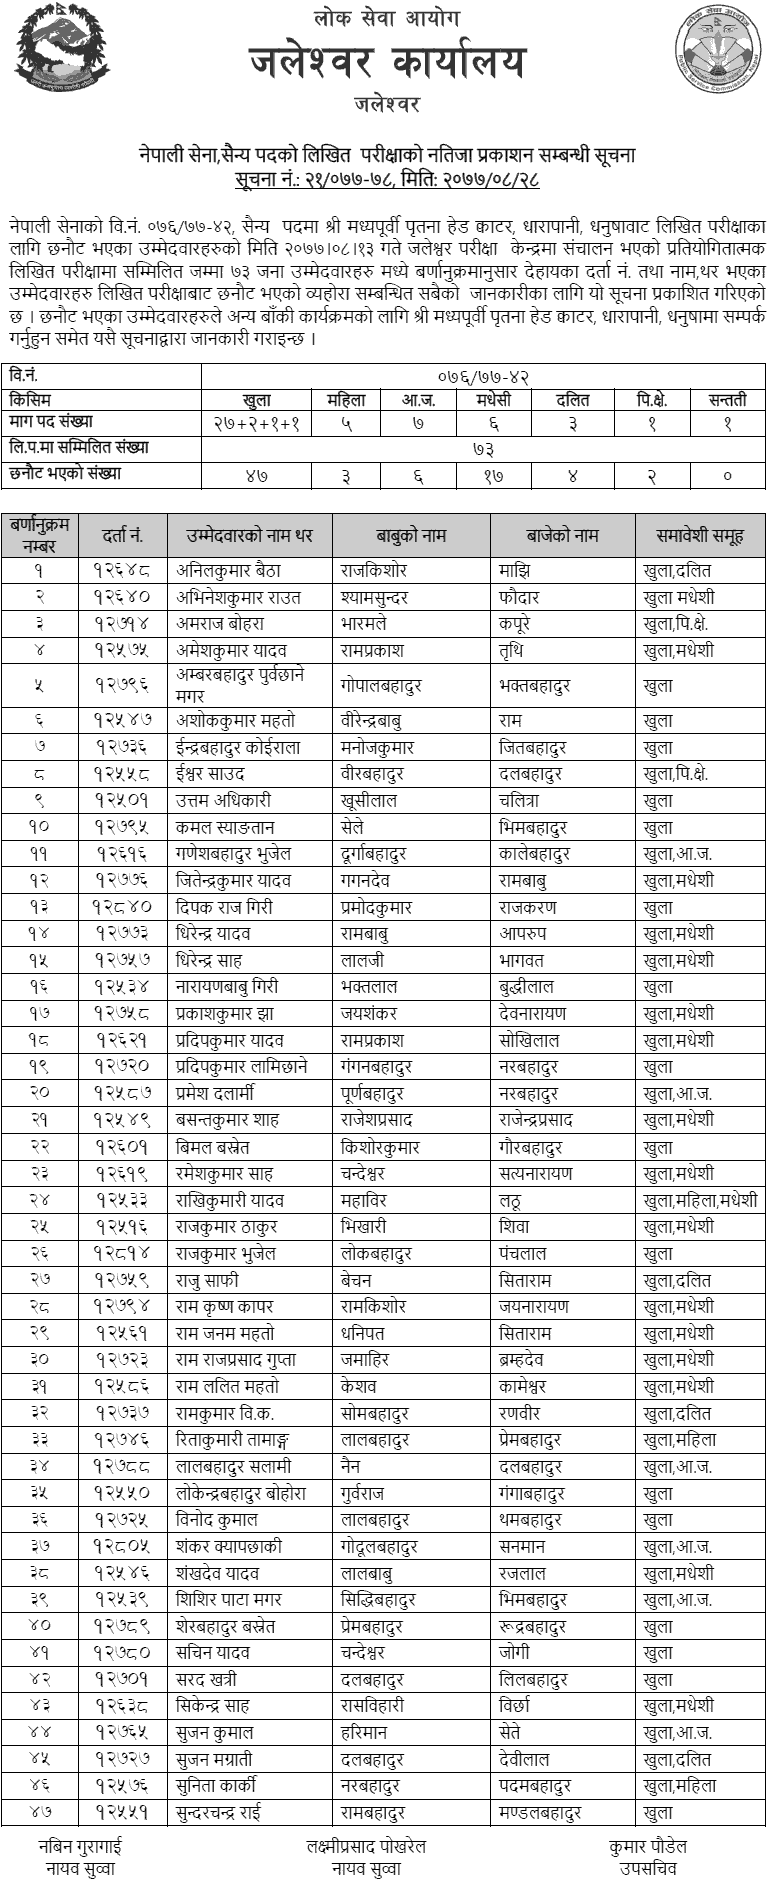 Nepal Army Dhanusha Military Post Written Exam Result